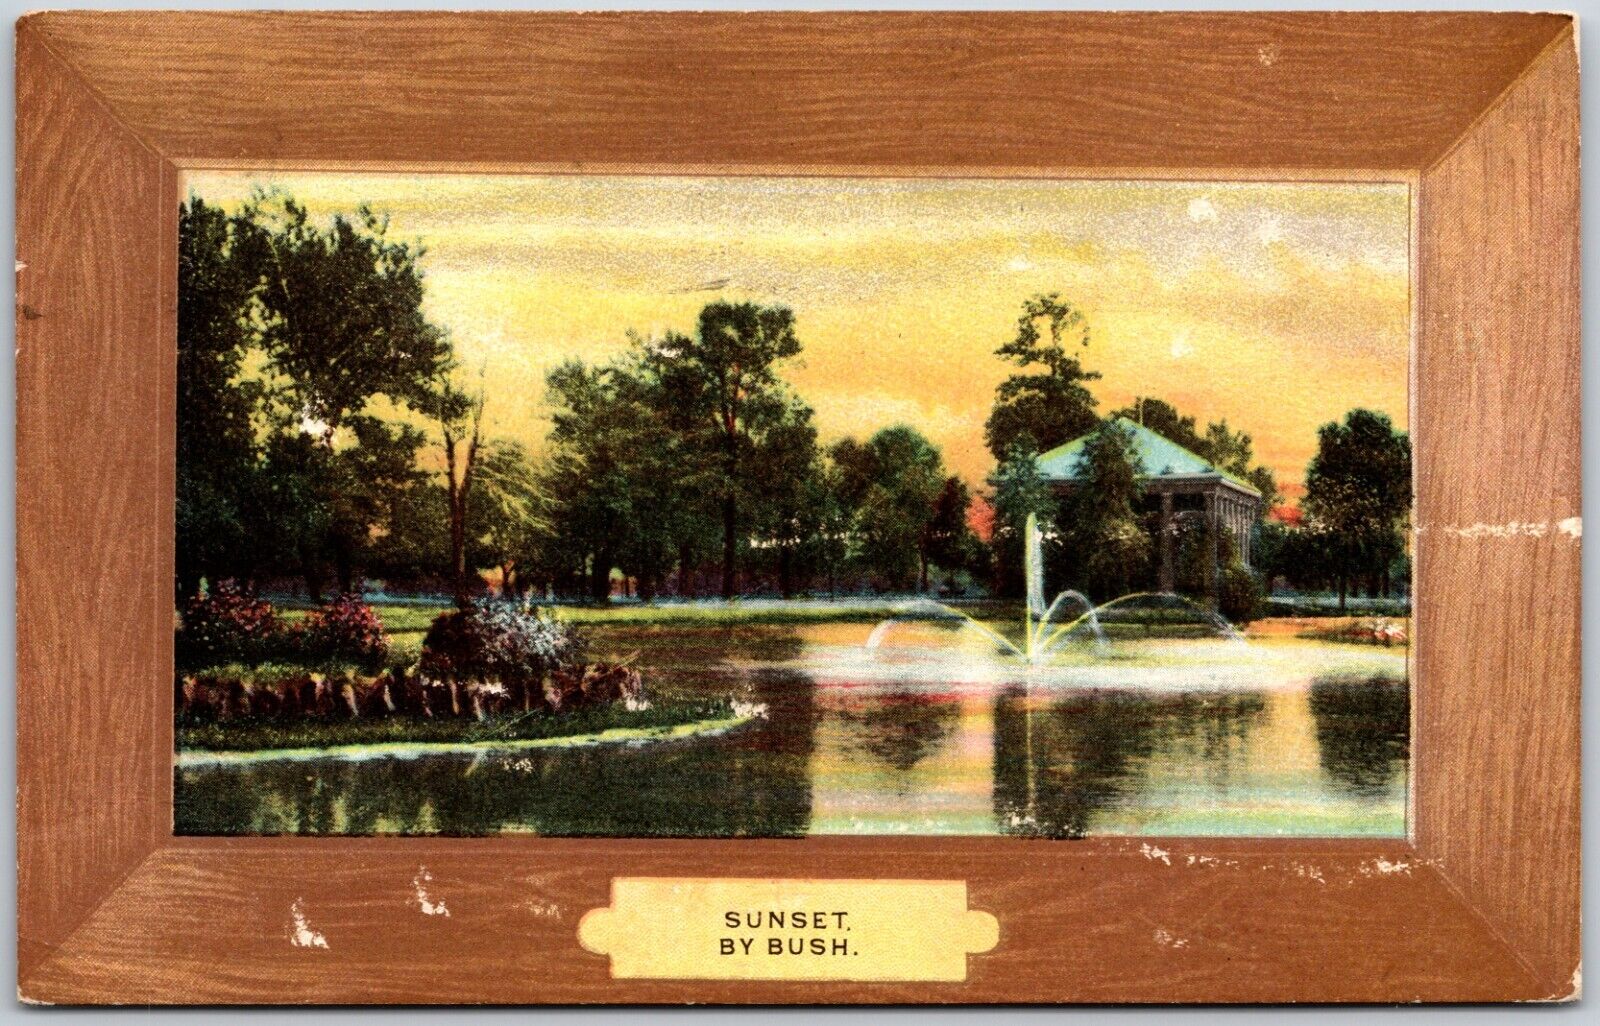 Sunset by Bush, 1908 - Postcard